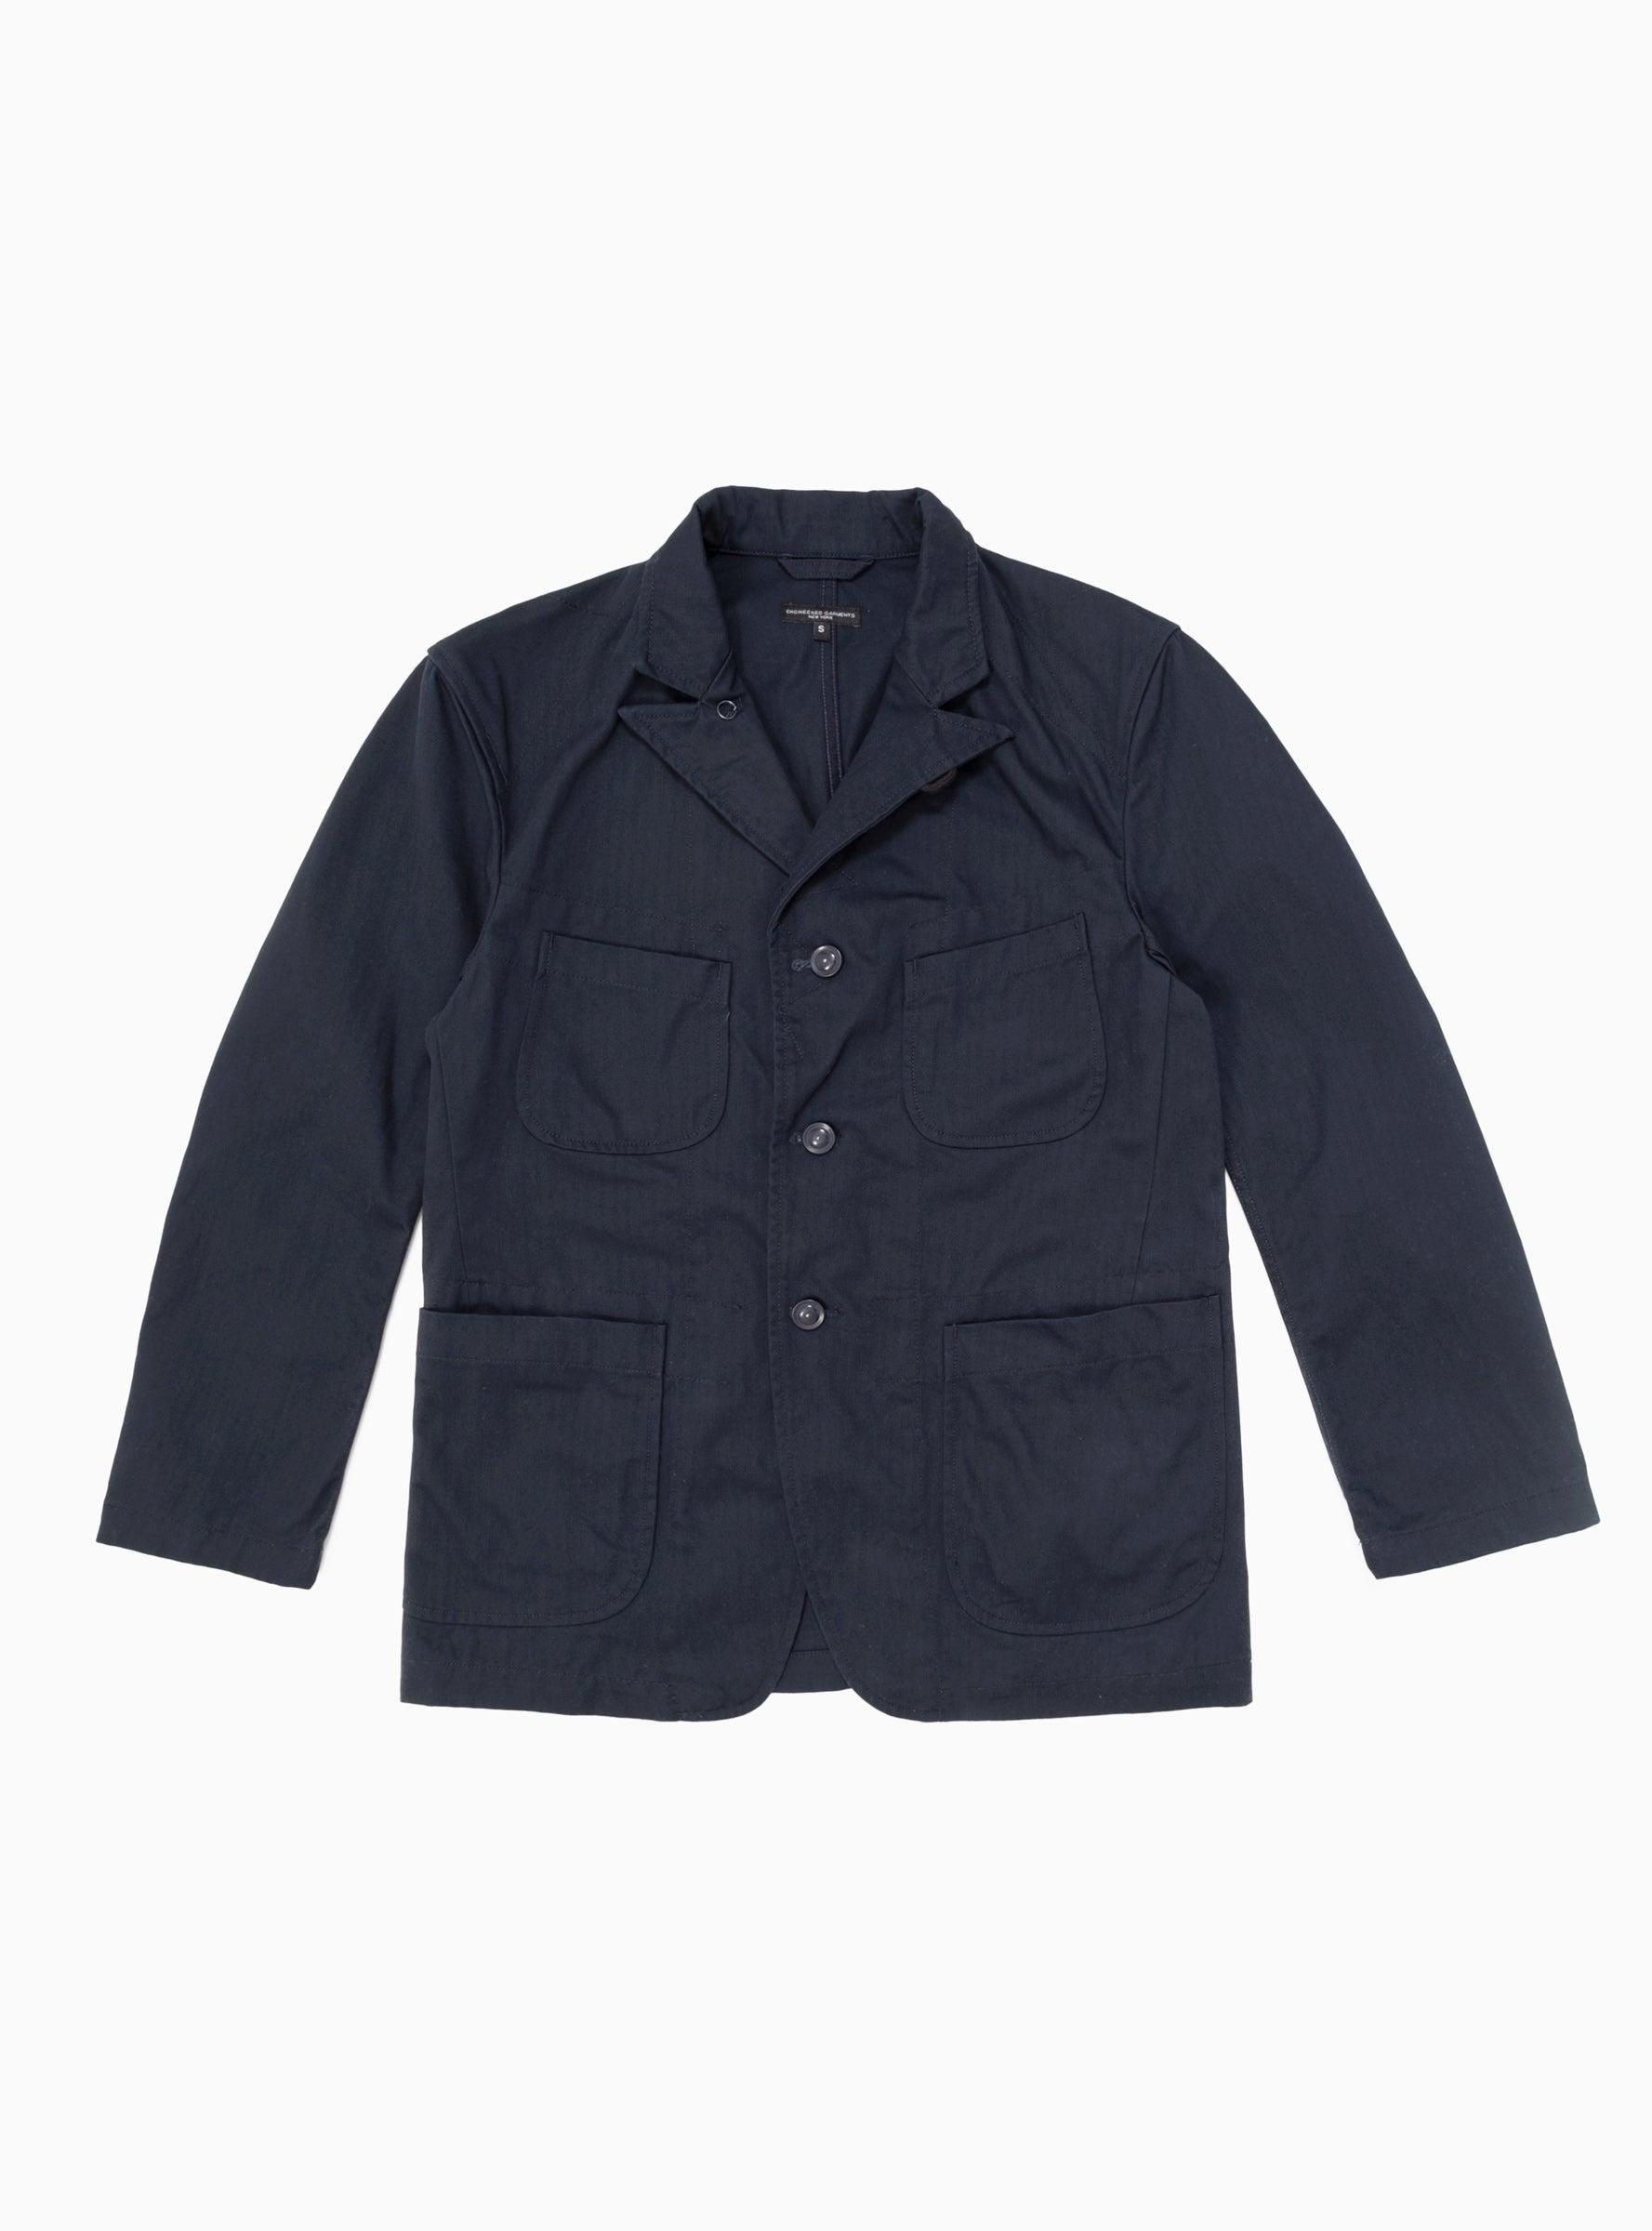 Engineered Garments Bedford Cotton Herringbone Twill Jacket Navy